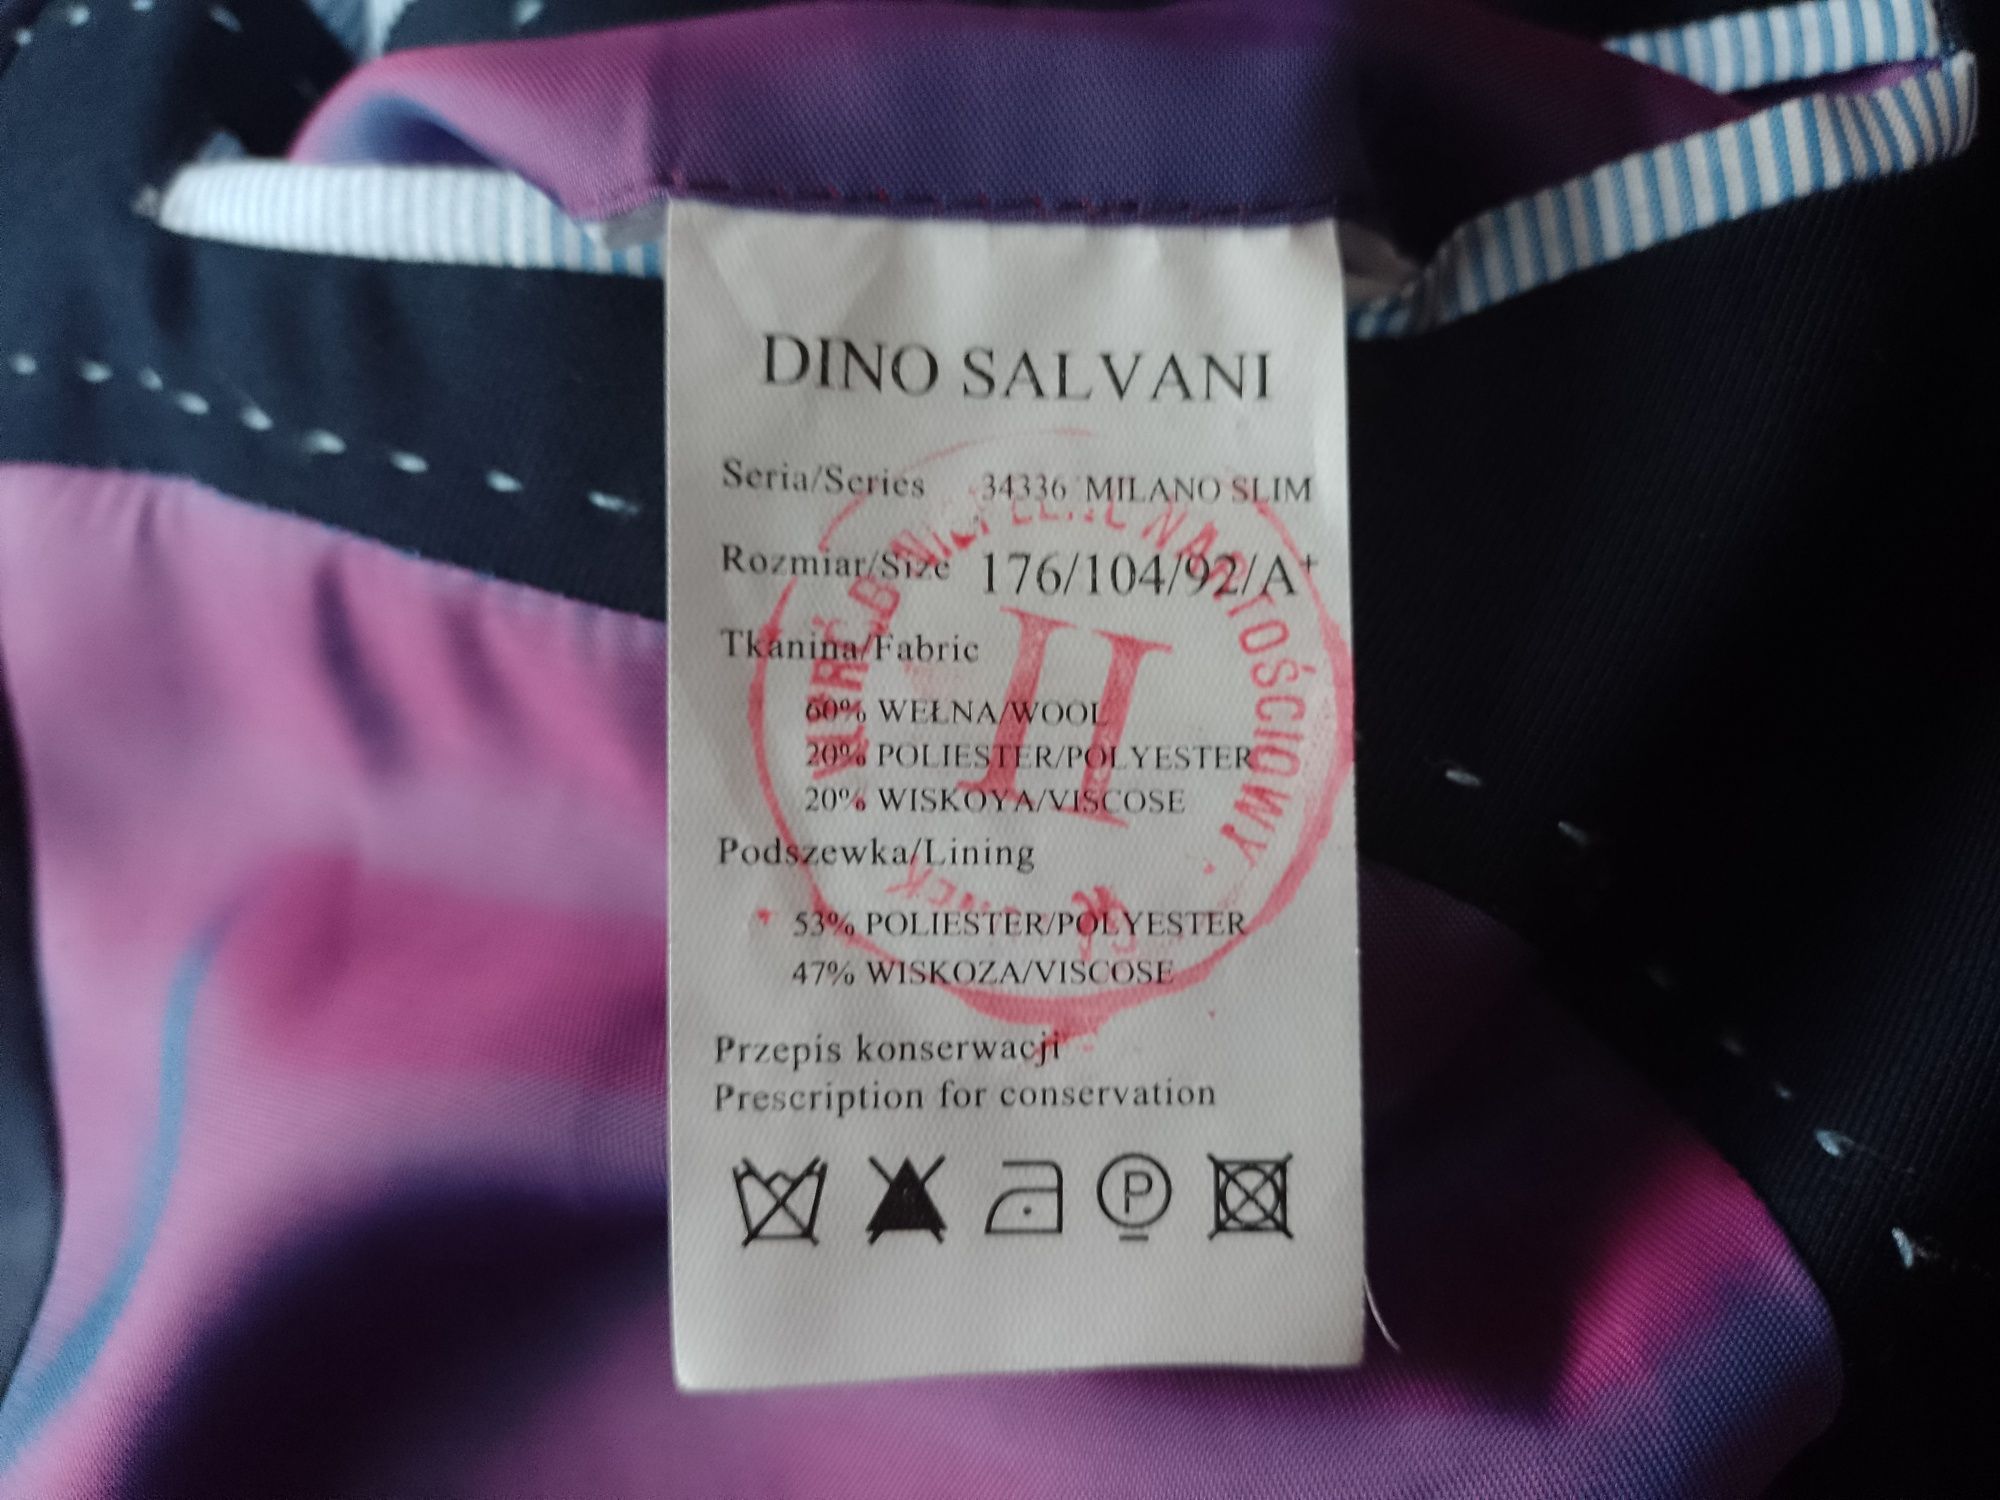 Garnitur Dino Salvani Milano Slim/Chinos 176/104/92/A+